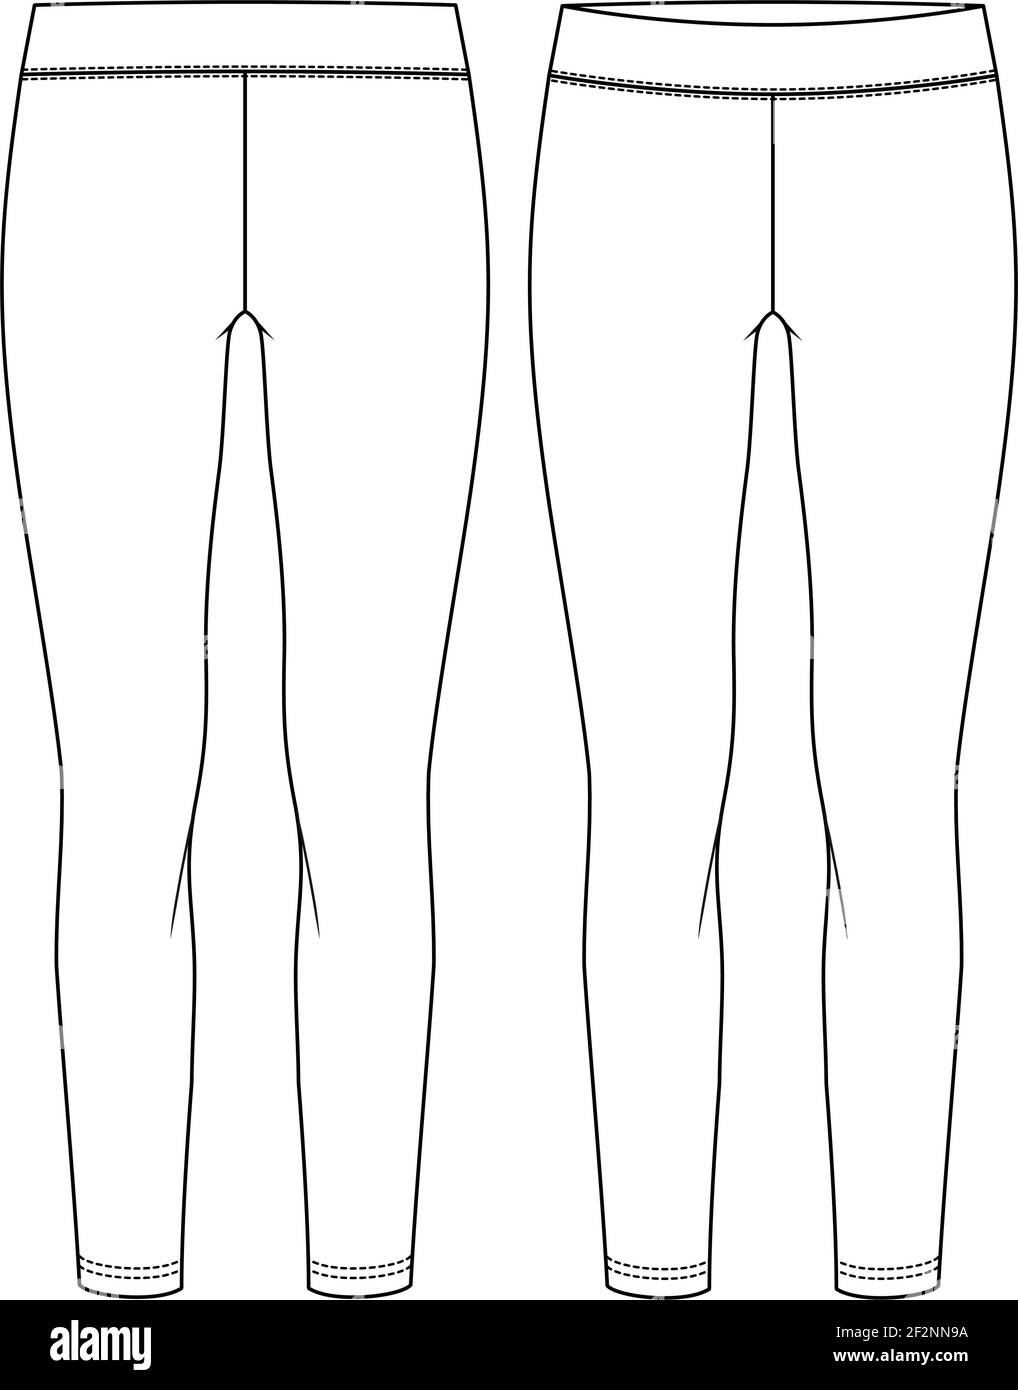 https://c8.alamy.com/comp/2F2NN9A/girls-long-legging-fashion-flat-sketch-template-women-active-wear-regular-length-stretch-legging-technical-fashion-illustration-2F2NN9A.jpg